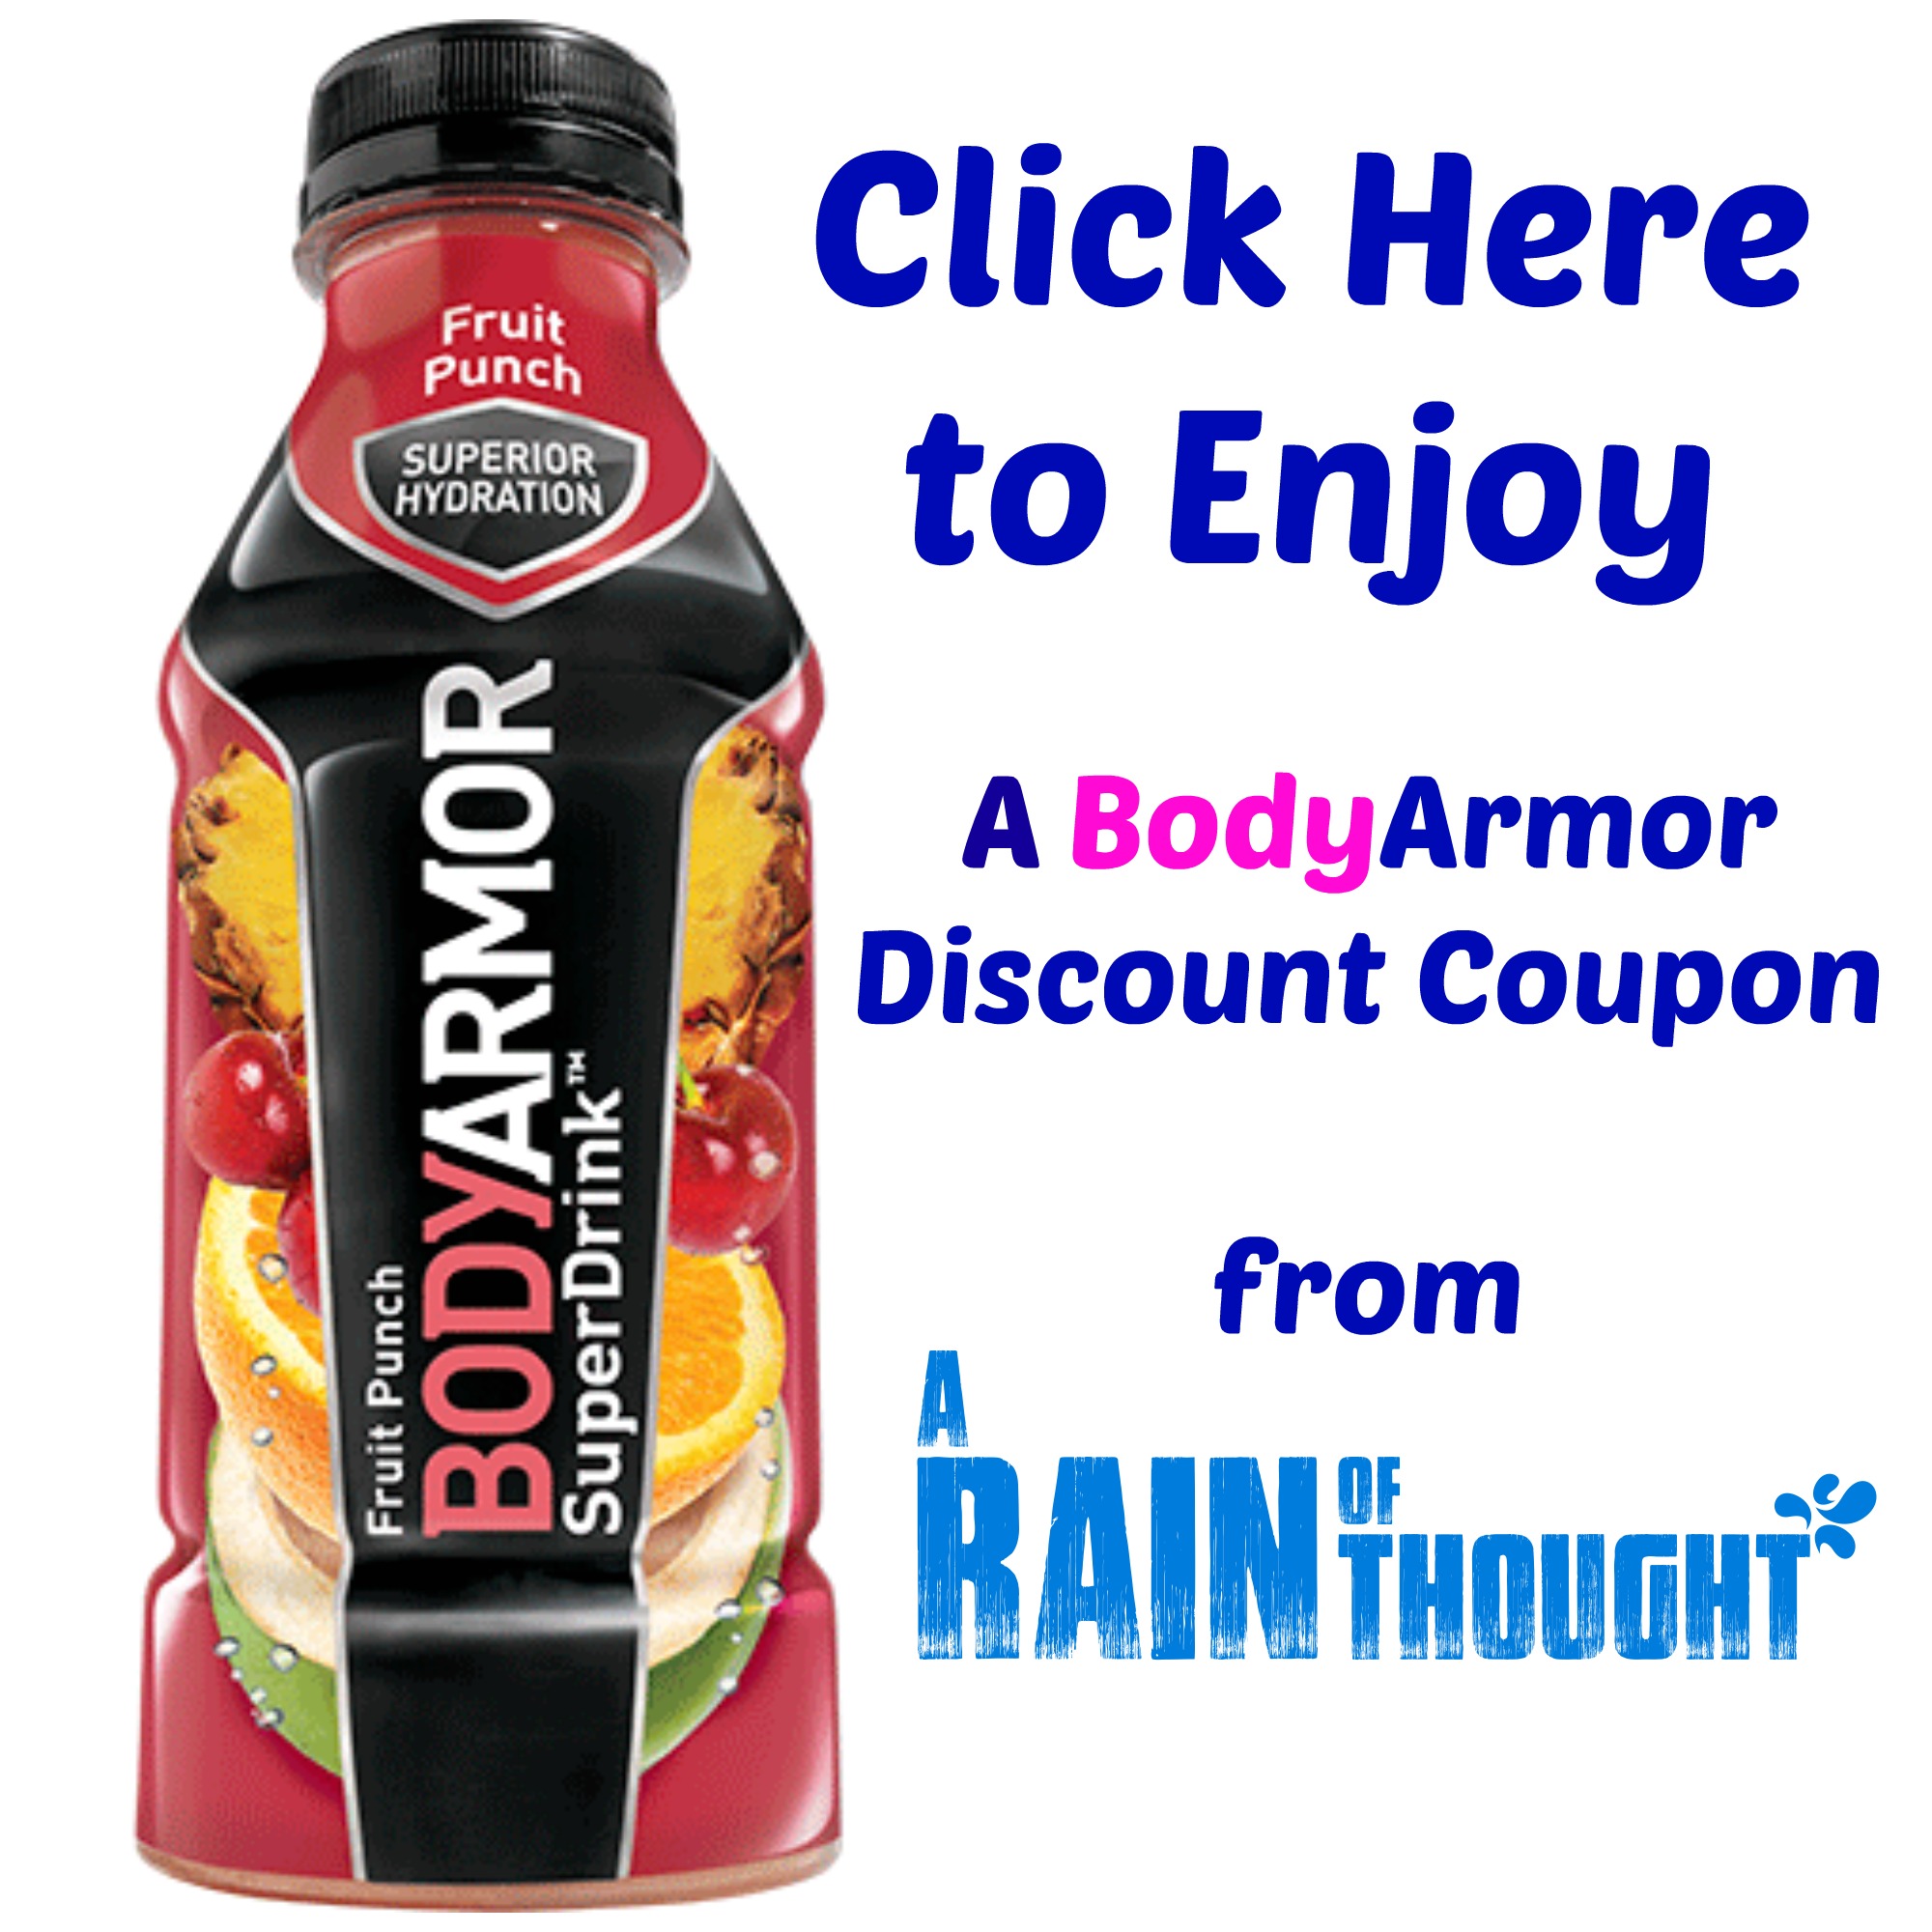 BodyArmor Discount Coupon